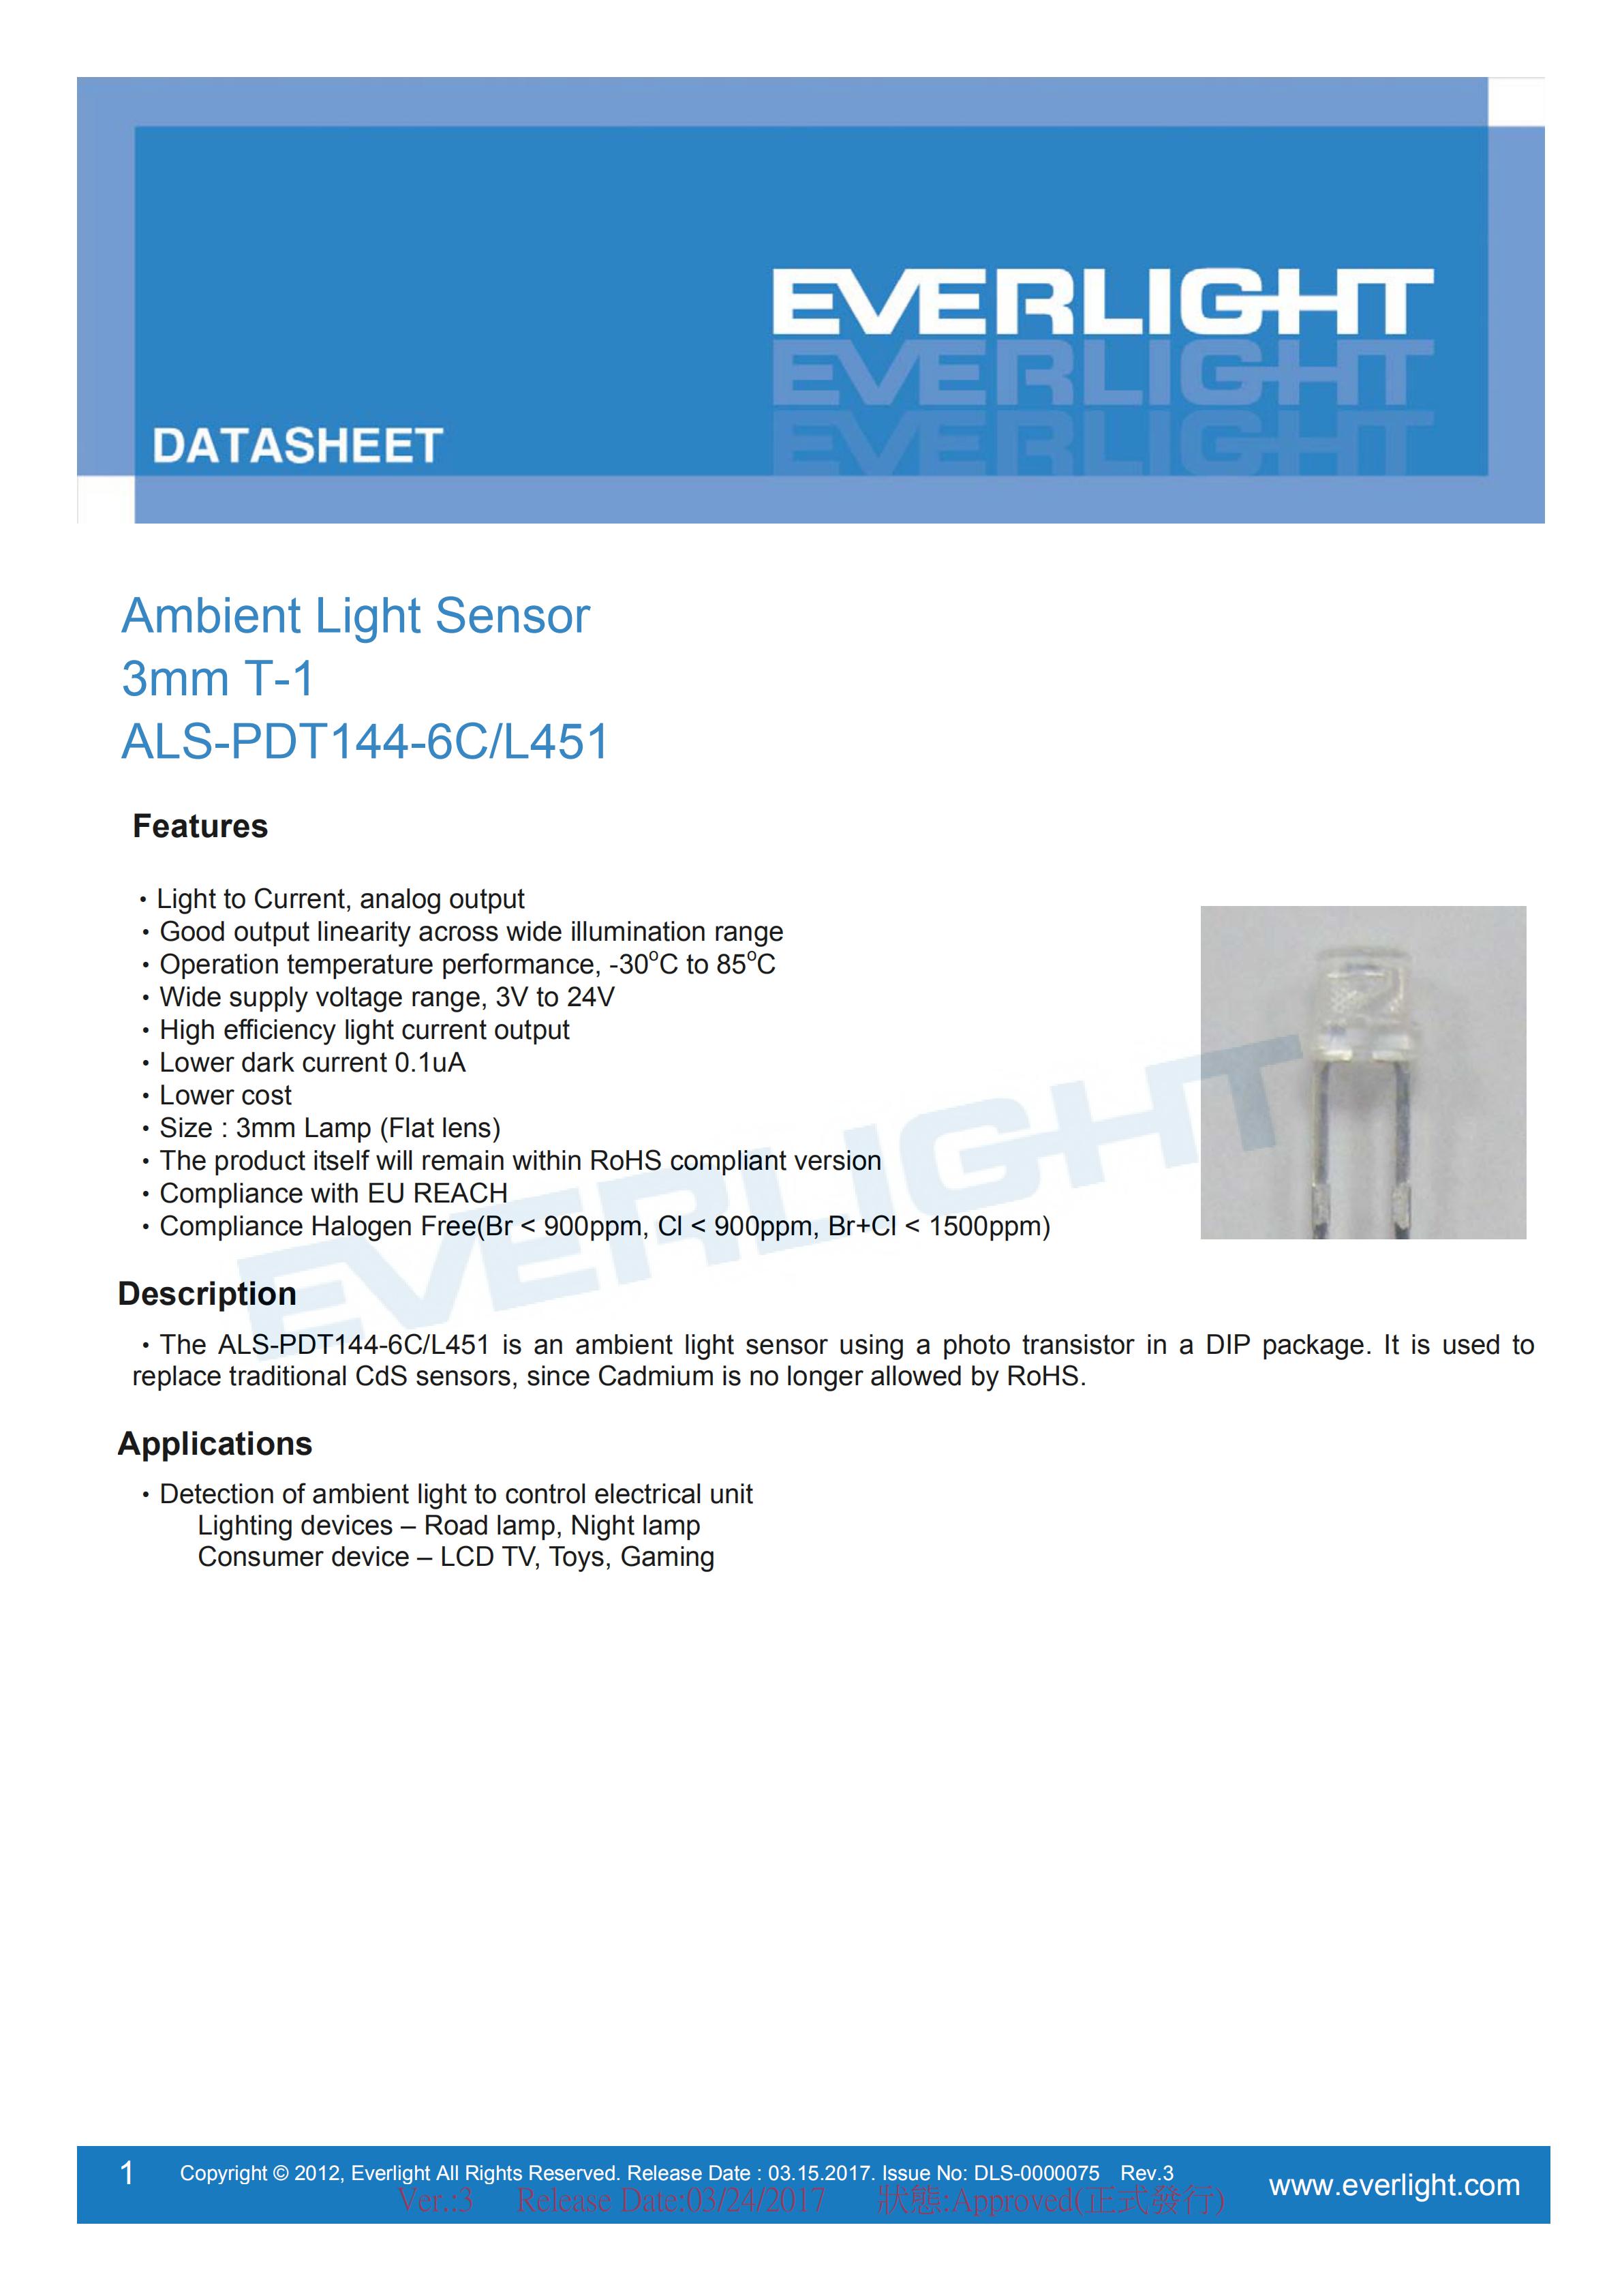 Everlight Ambient Light Sensor ALS-PDT144-6C/L451 Datasheet